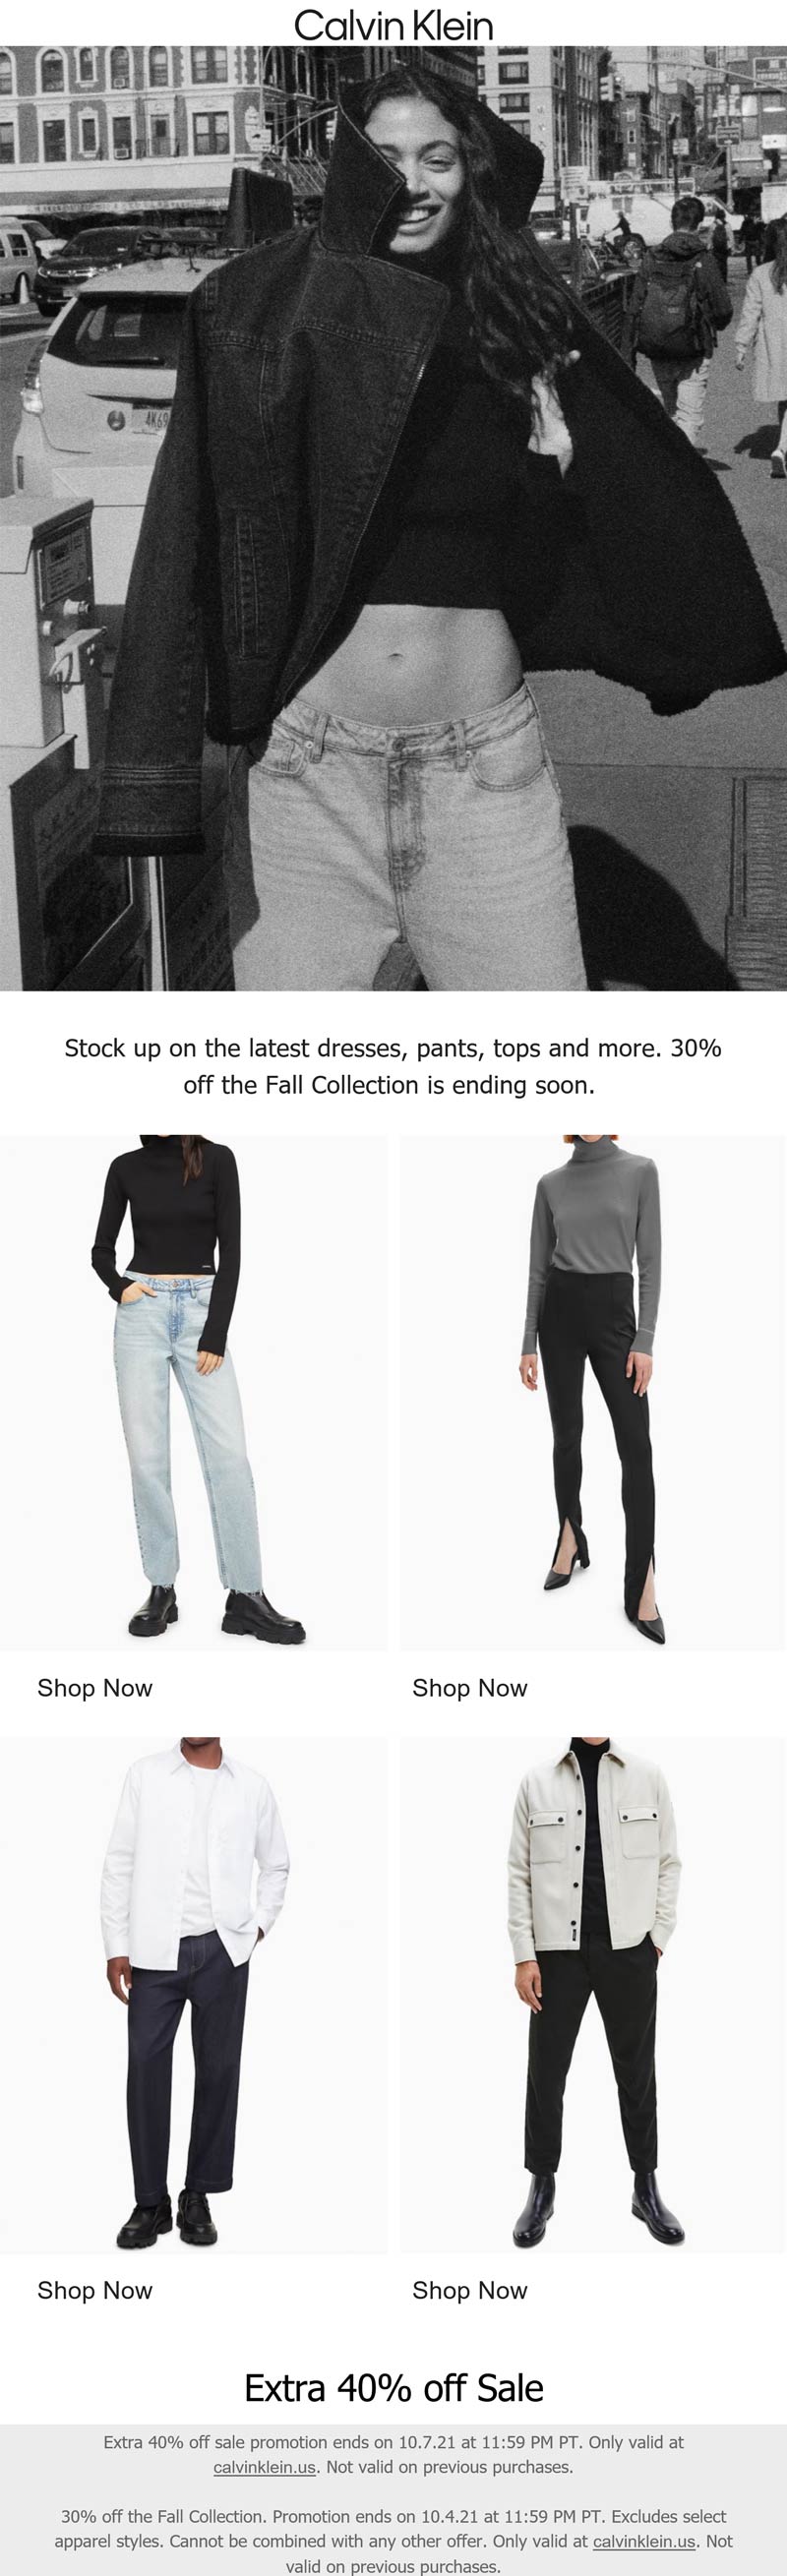 Calvin Klein stores Coupon  Extra 40% off sale items online at Calvin Klein #calvinklein 